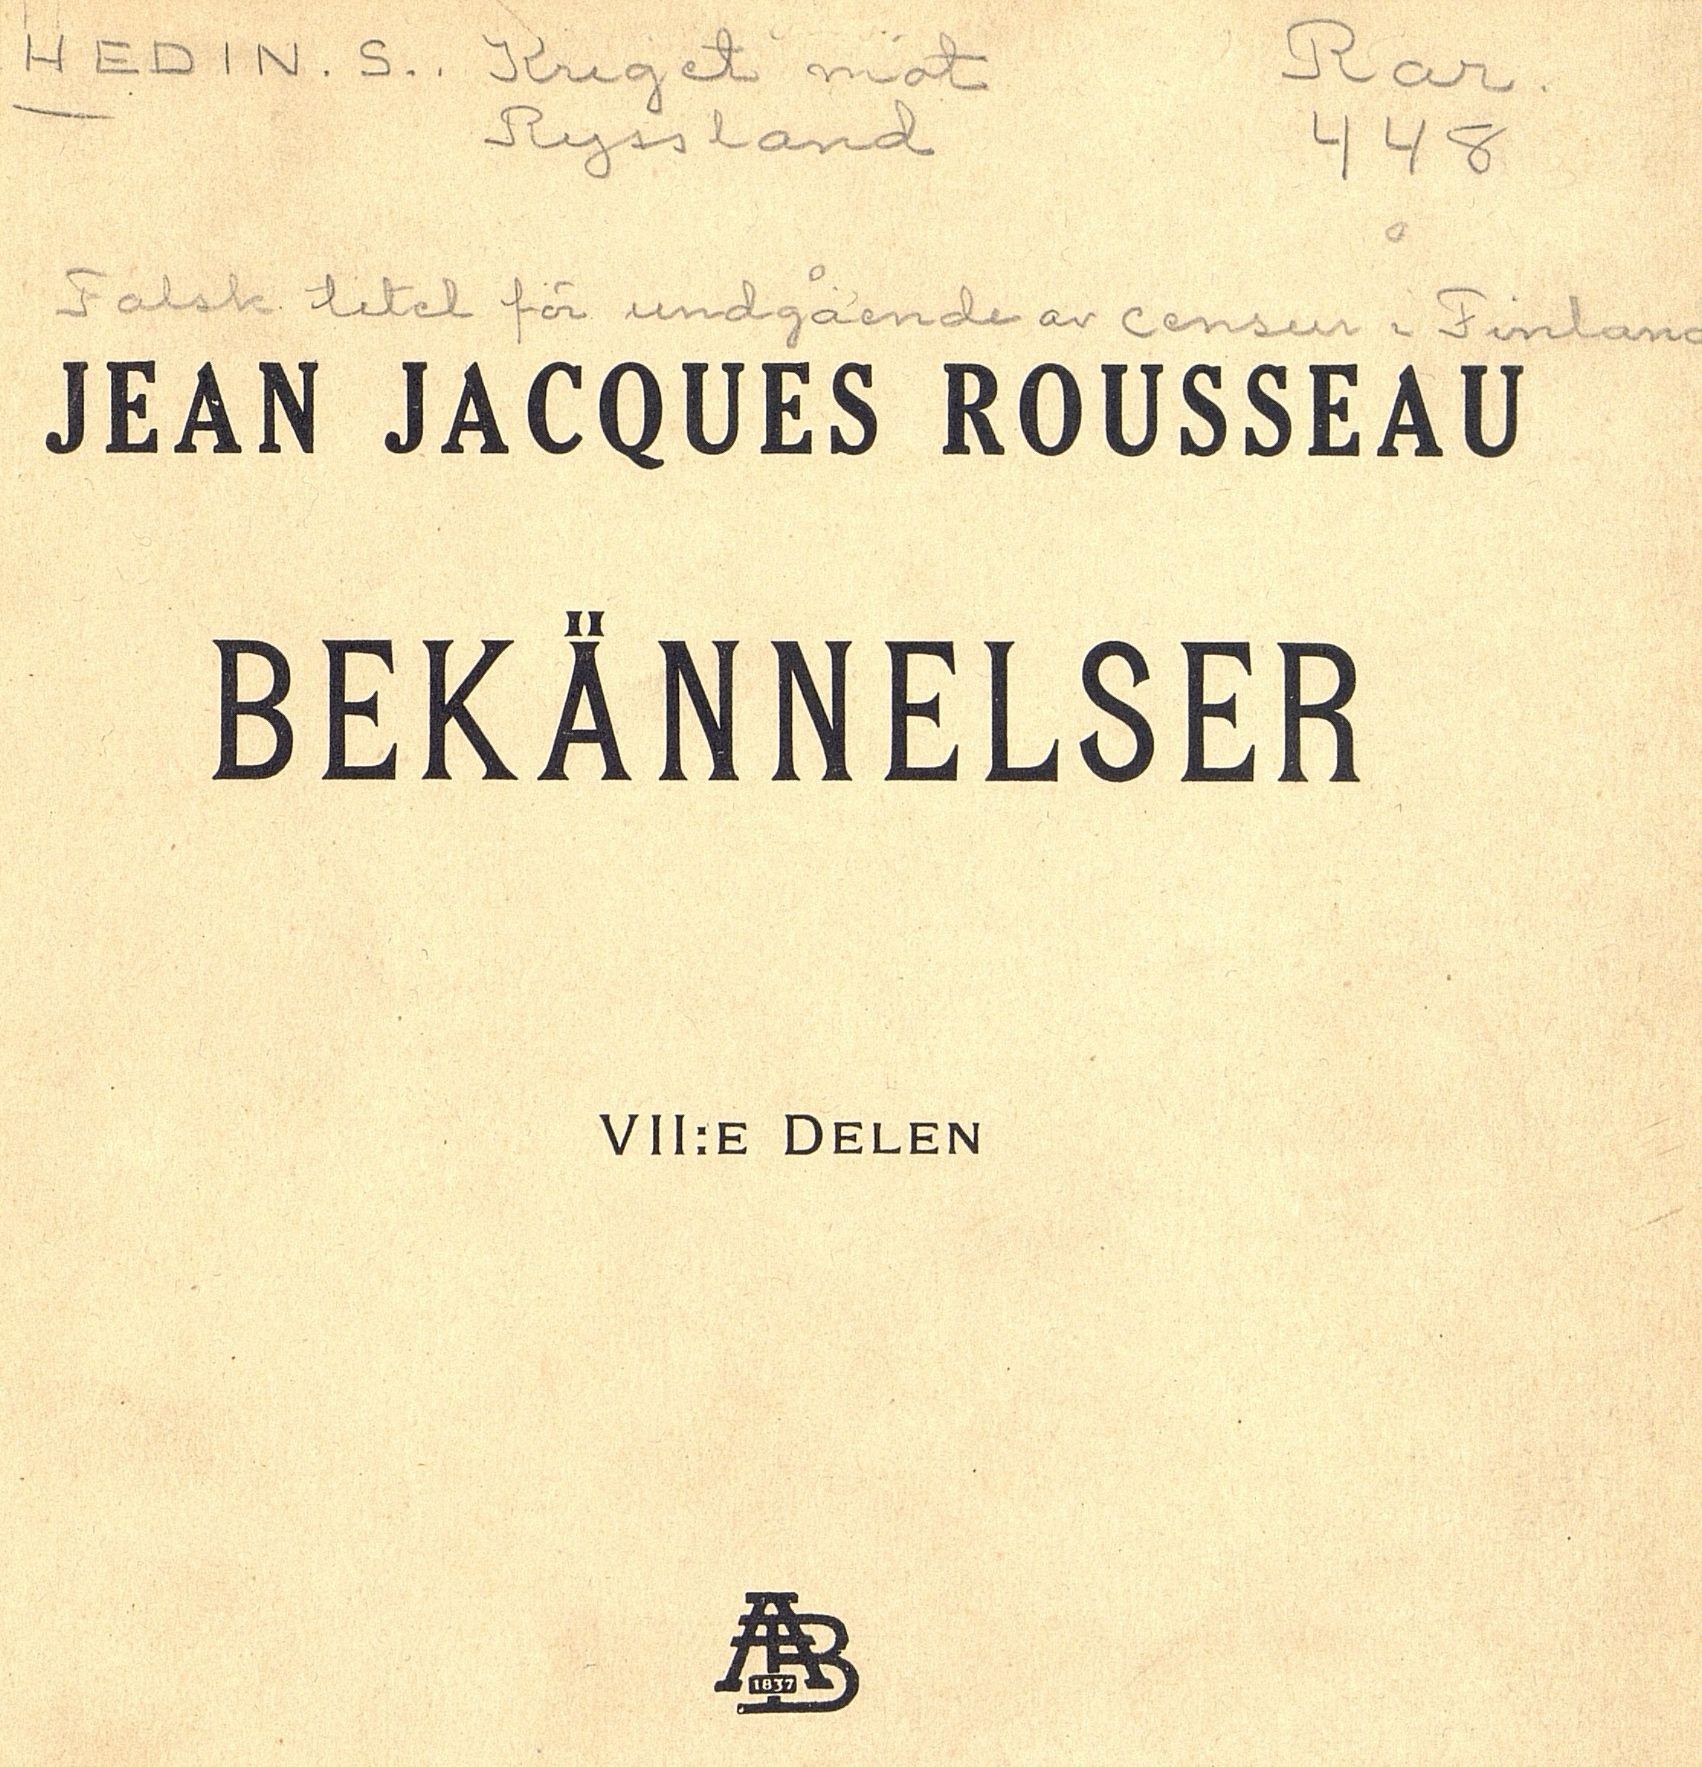 Falskt omslag som lyder "Jean Jacques Rousseau: Bekännelser. VII delen", egentligen innehåller boken Sven Hedins "Kriget mot Ryssland".